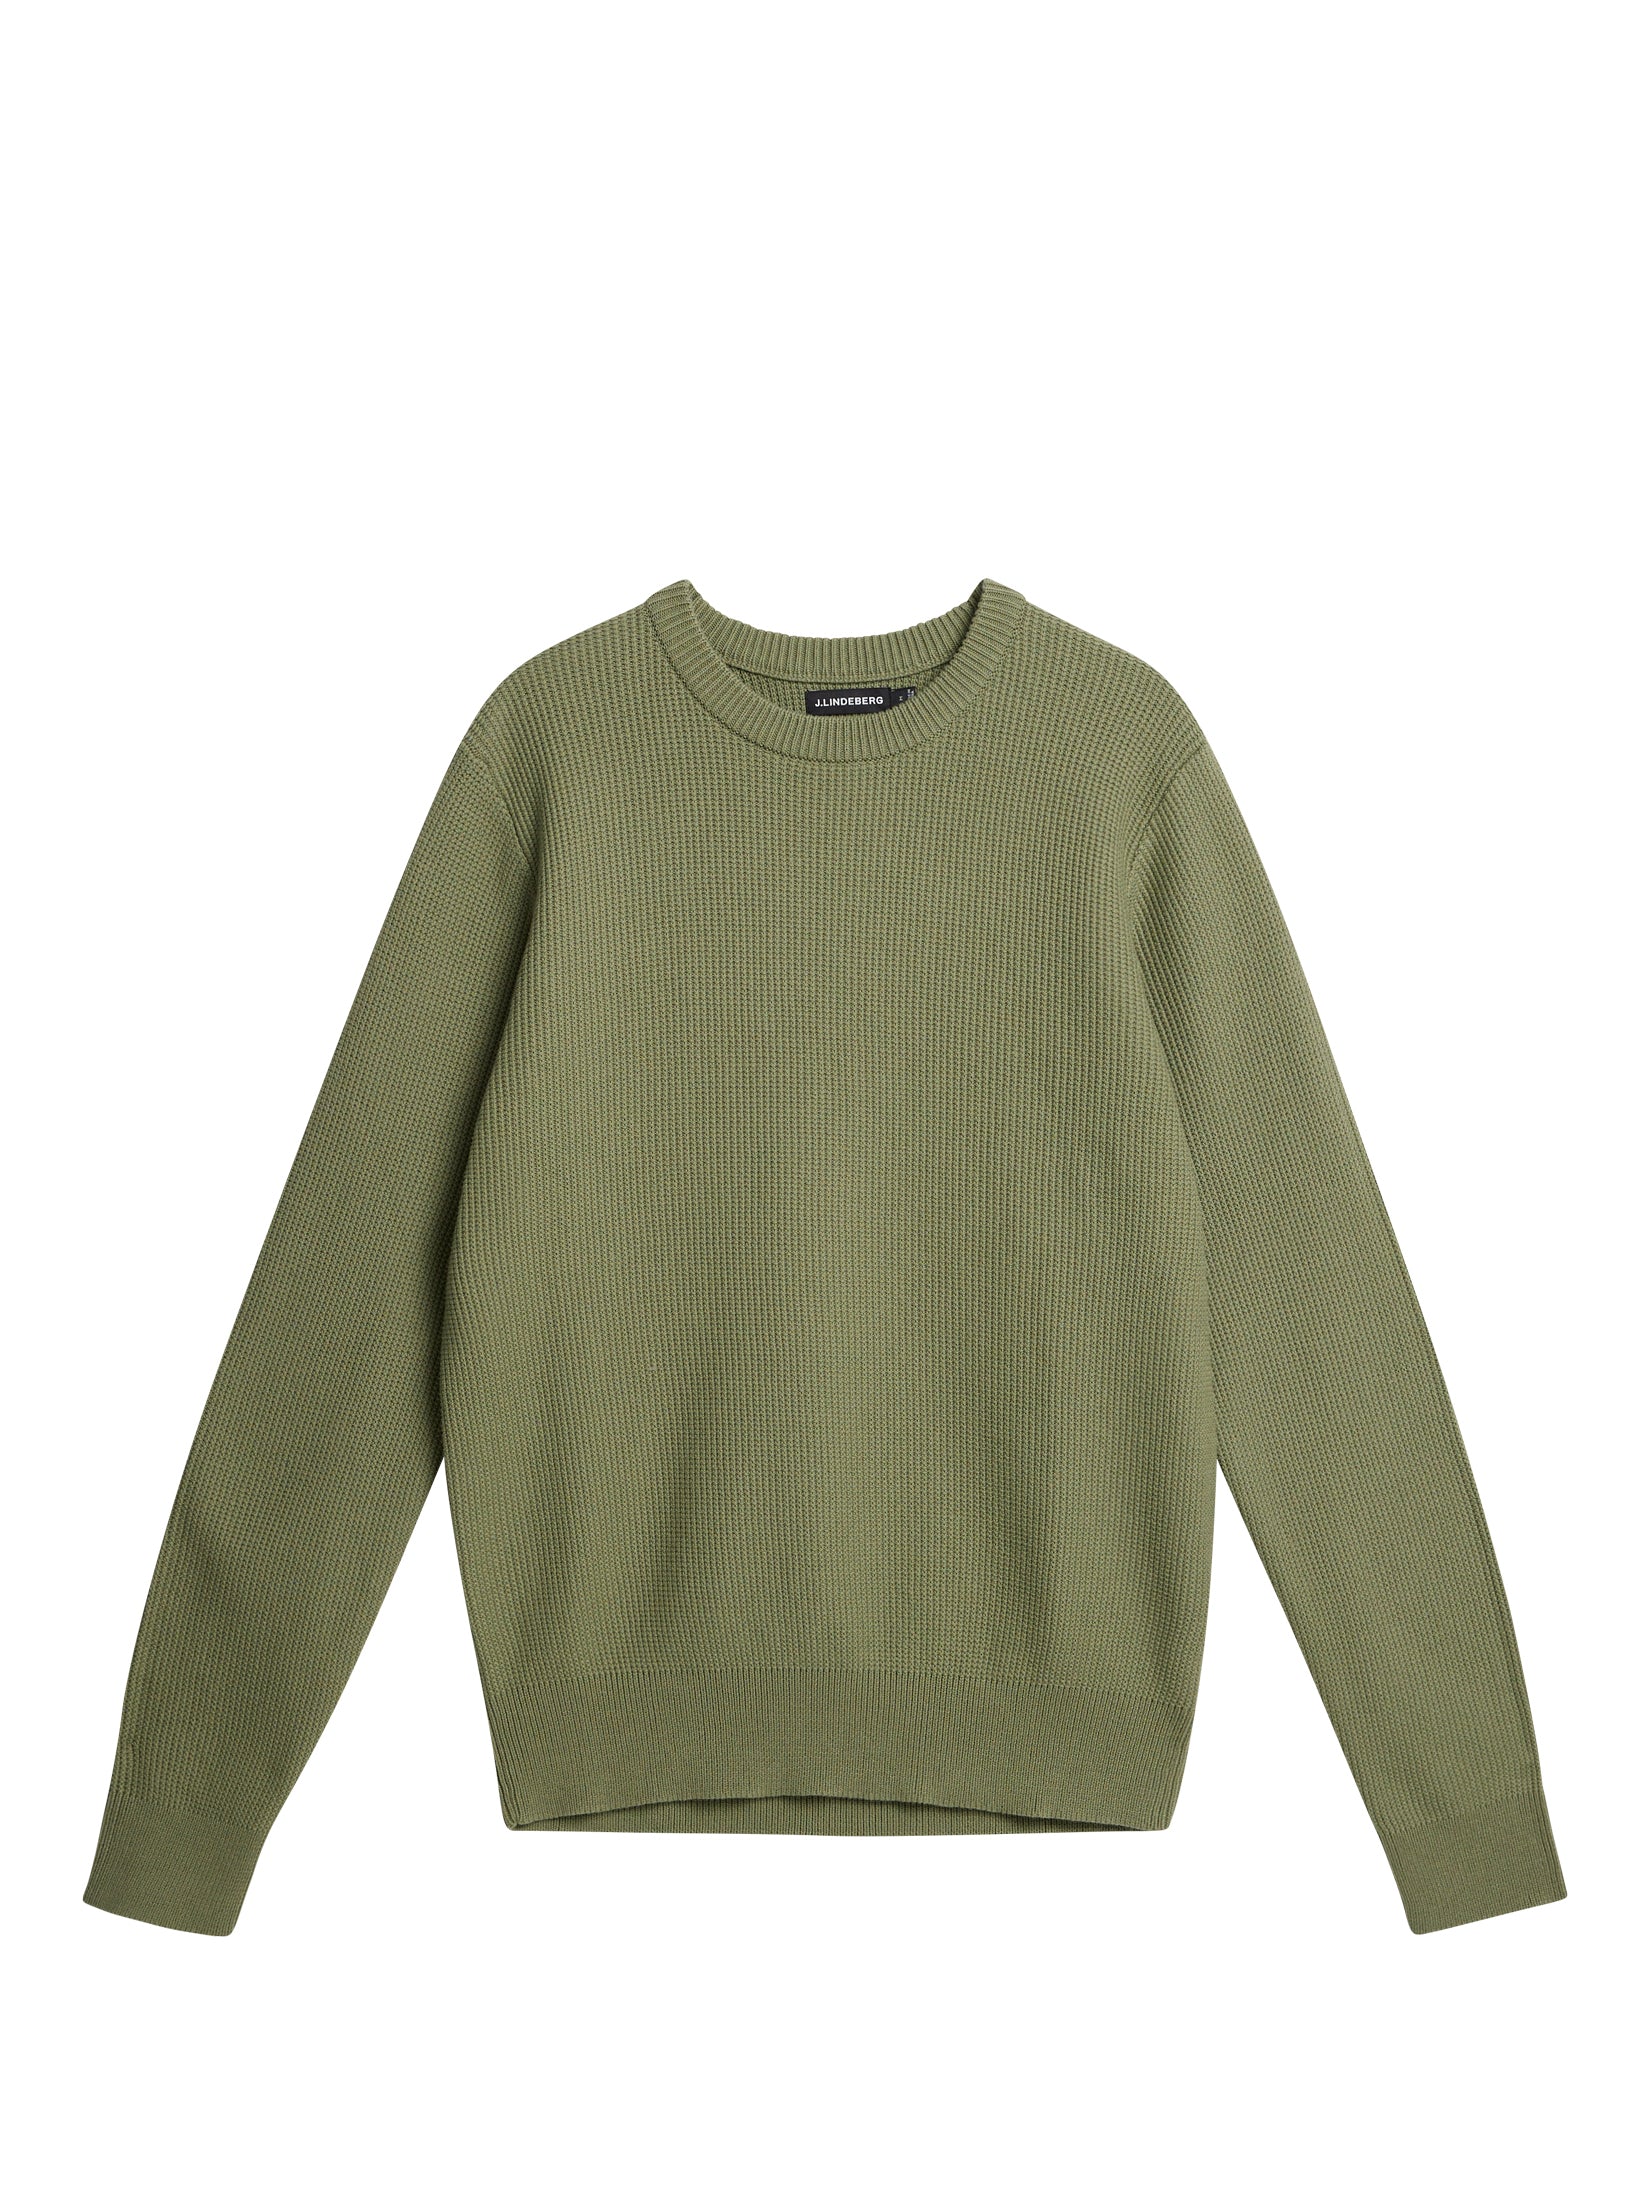 Arthur Cotton Sweater